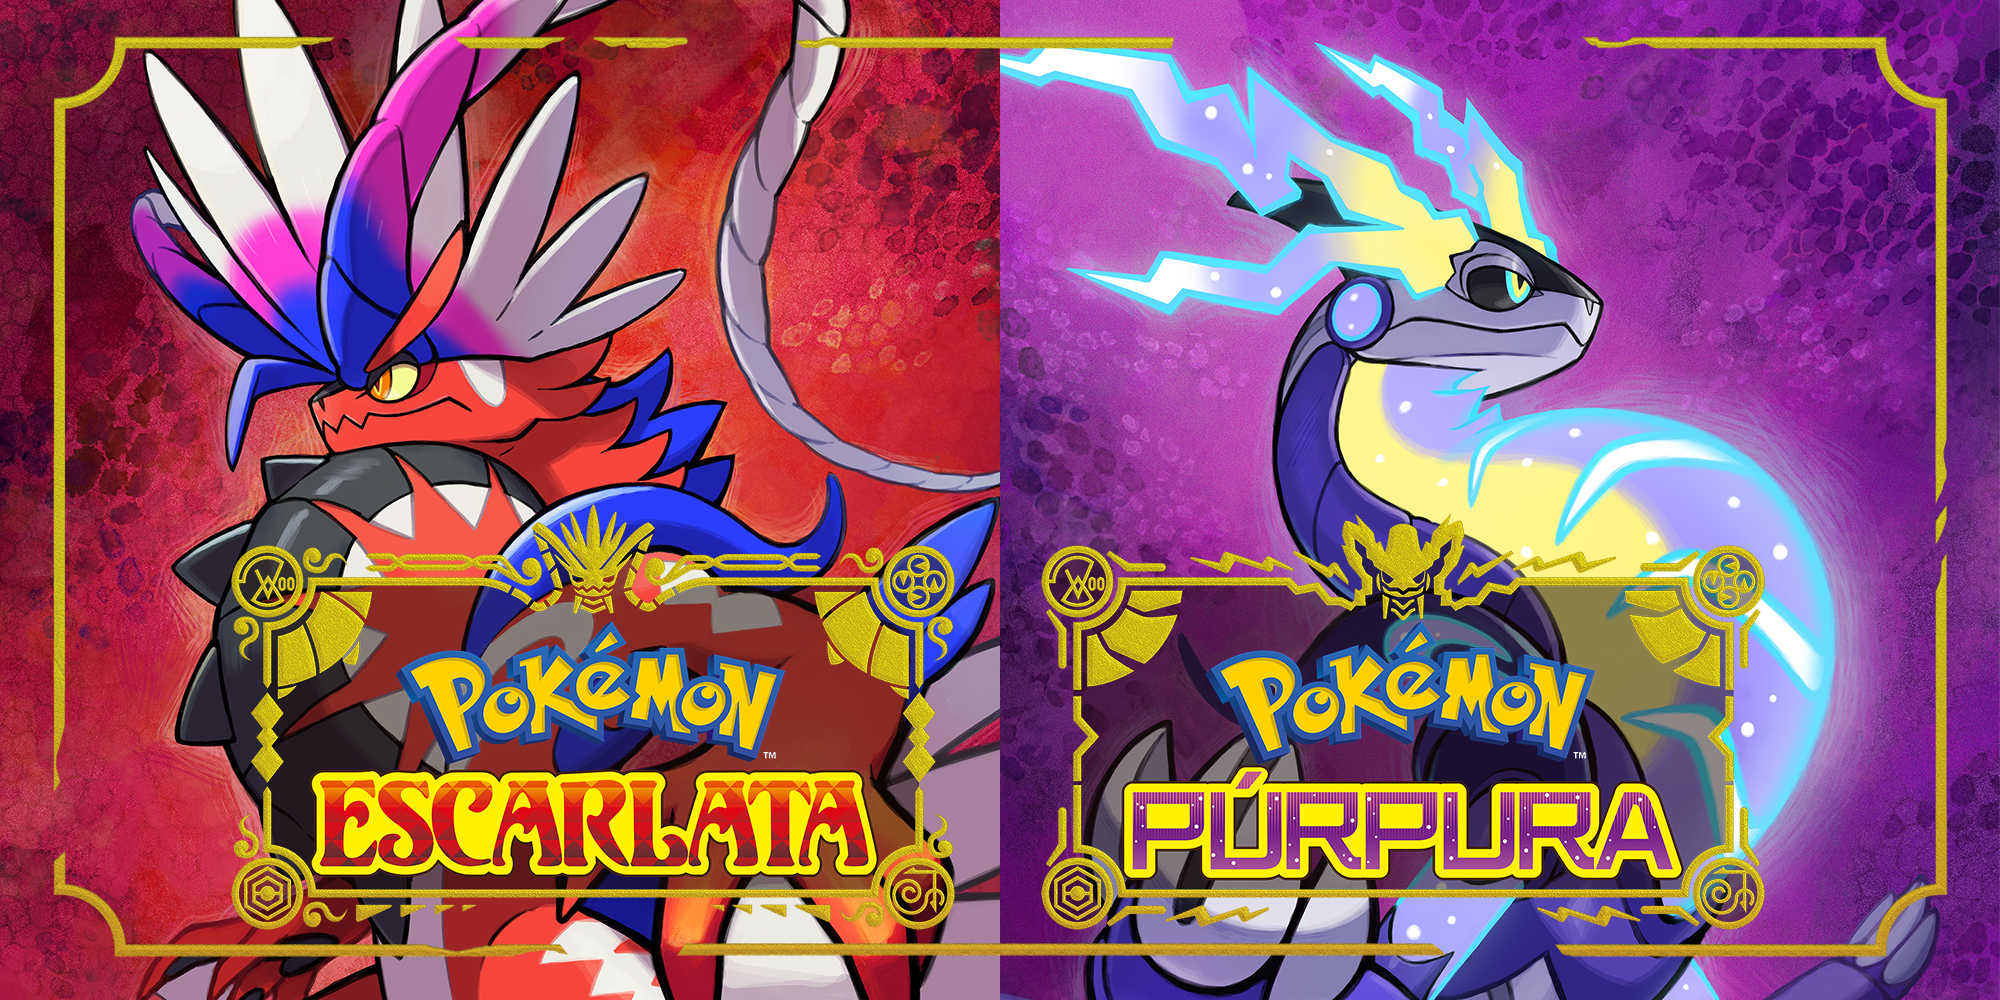 Pokémon Escarlata y Pokémon Púrpura – Vuestra historia (Nintendo Switch) 